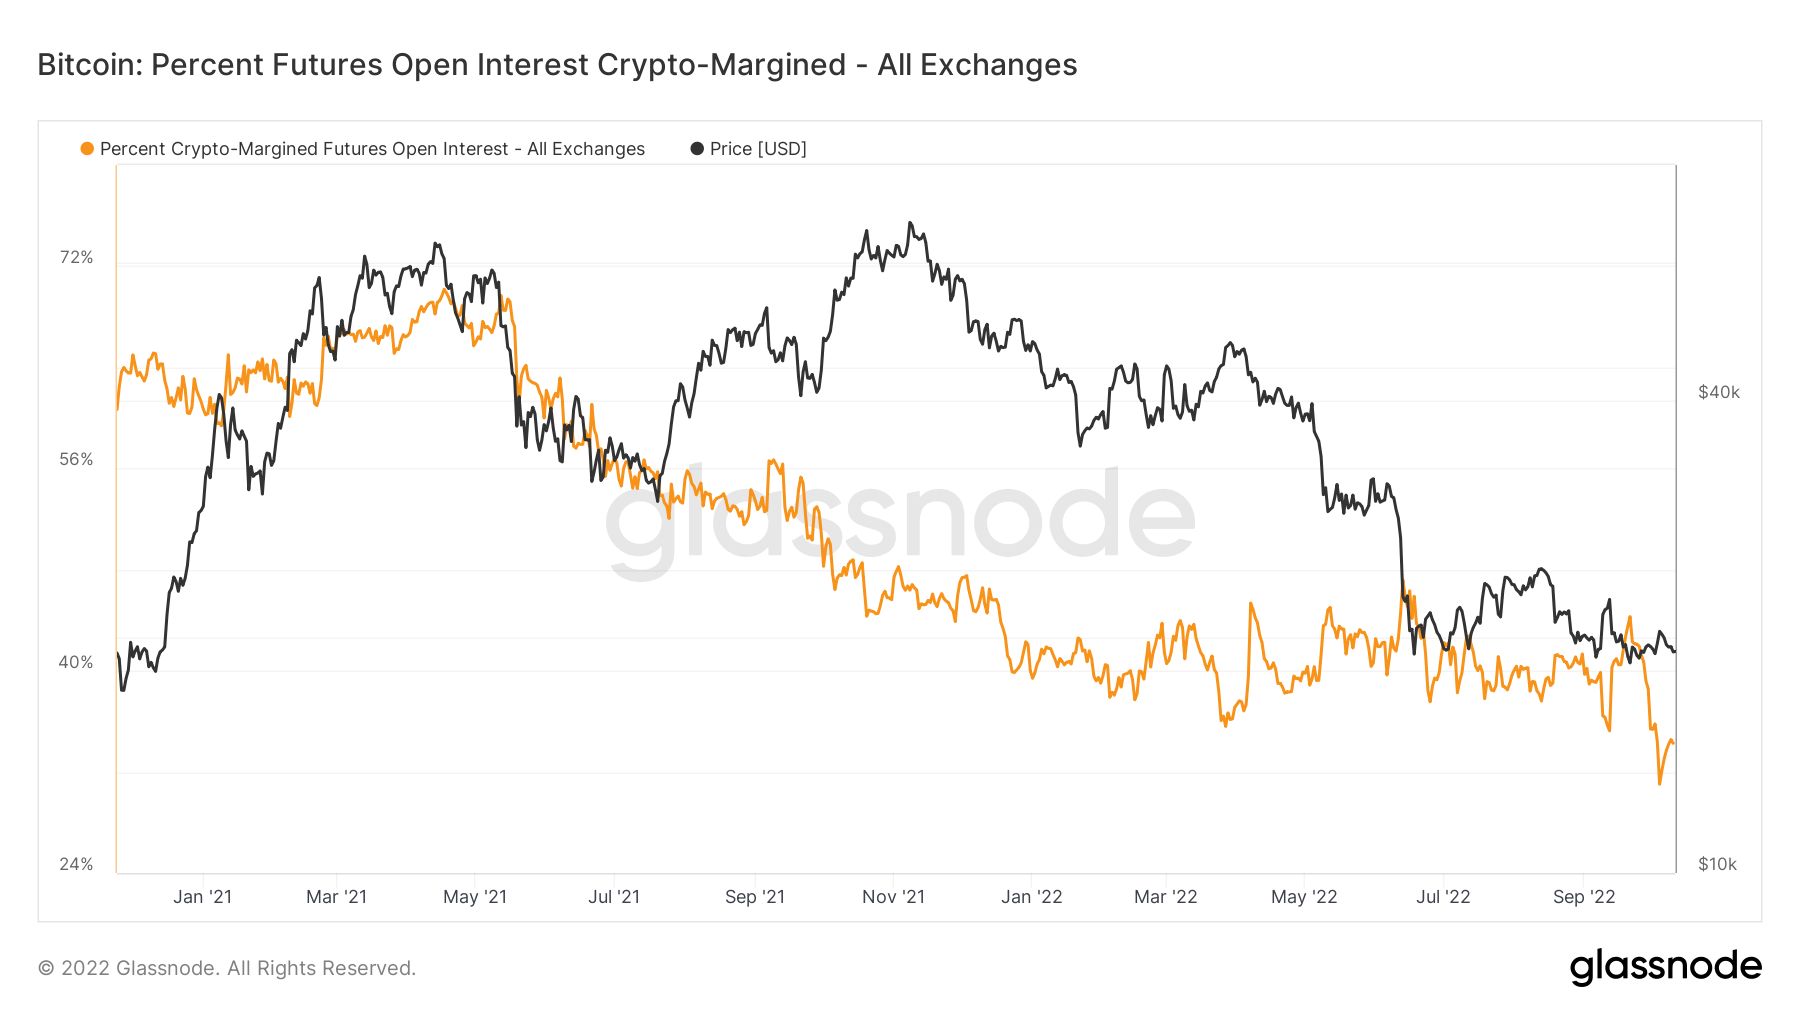 Bitcoin Percent Futures Open Interest Crypto-Margined